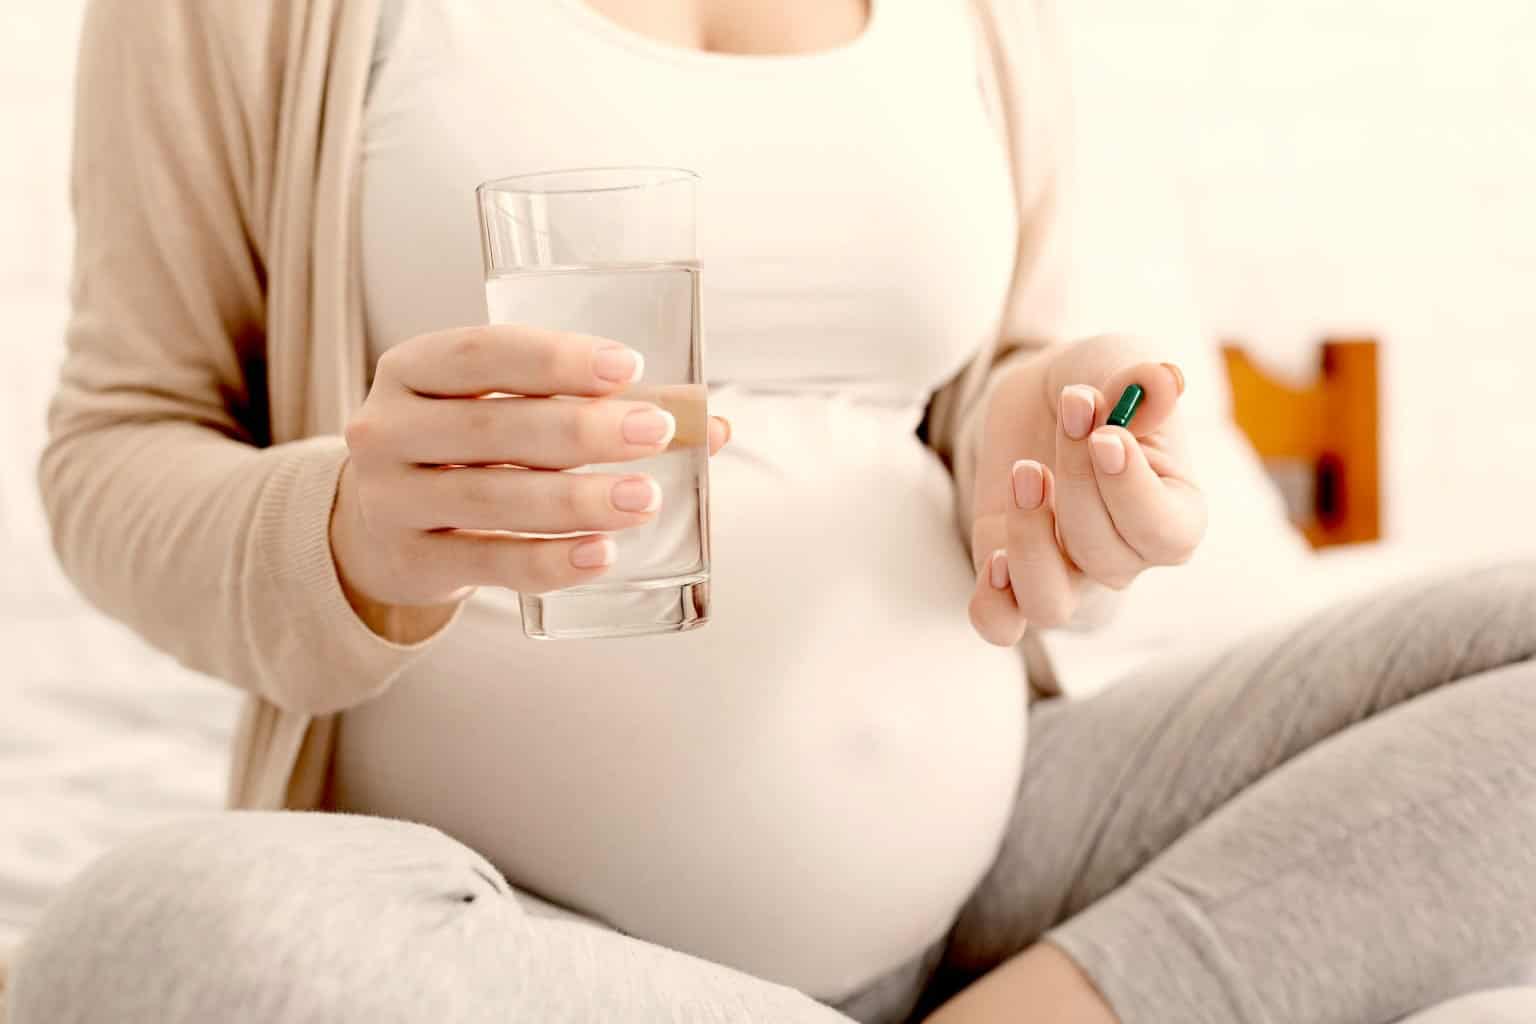 Medicamentos Y Lactancia Materna Criar Con Sentido Común